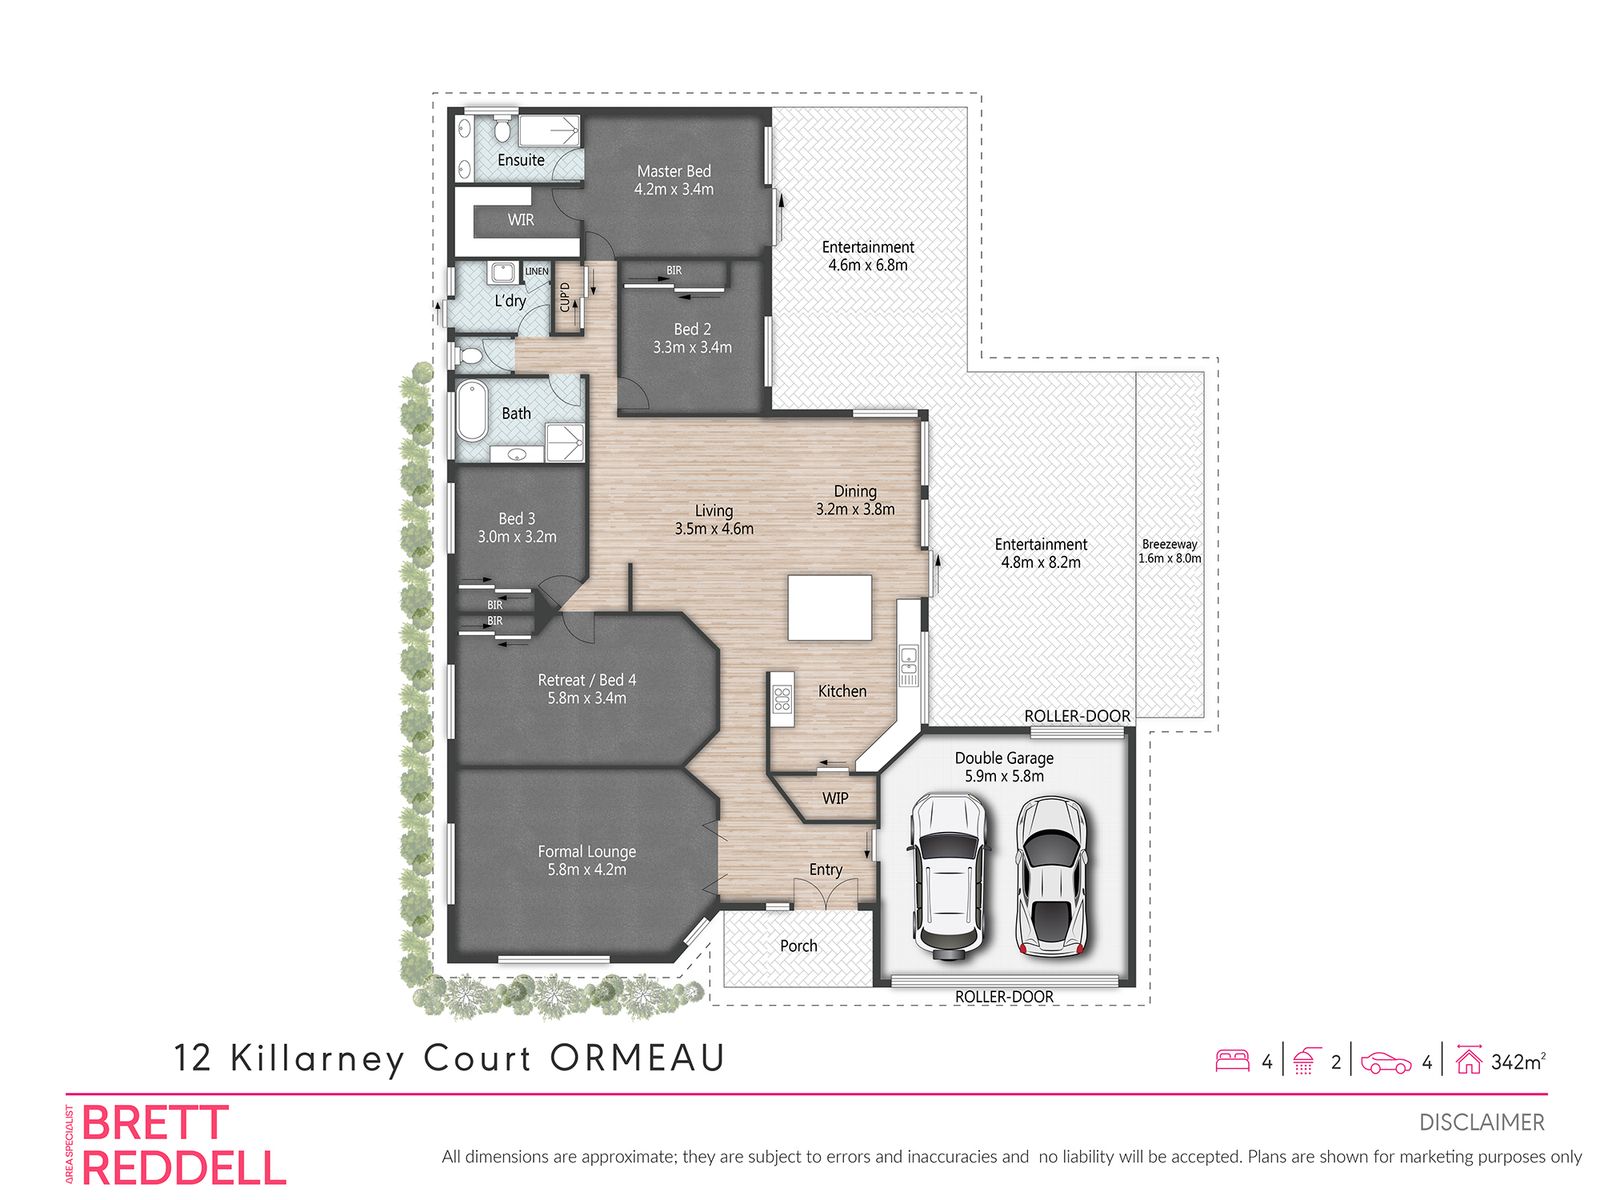 12 Killarney Court, Ormeau